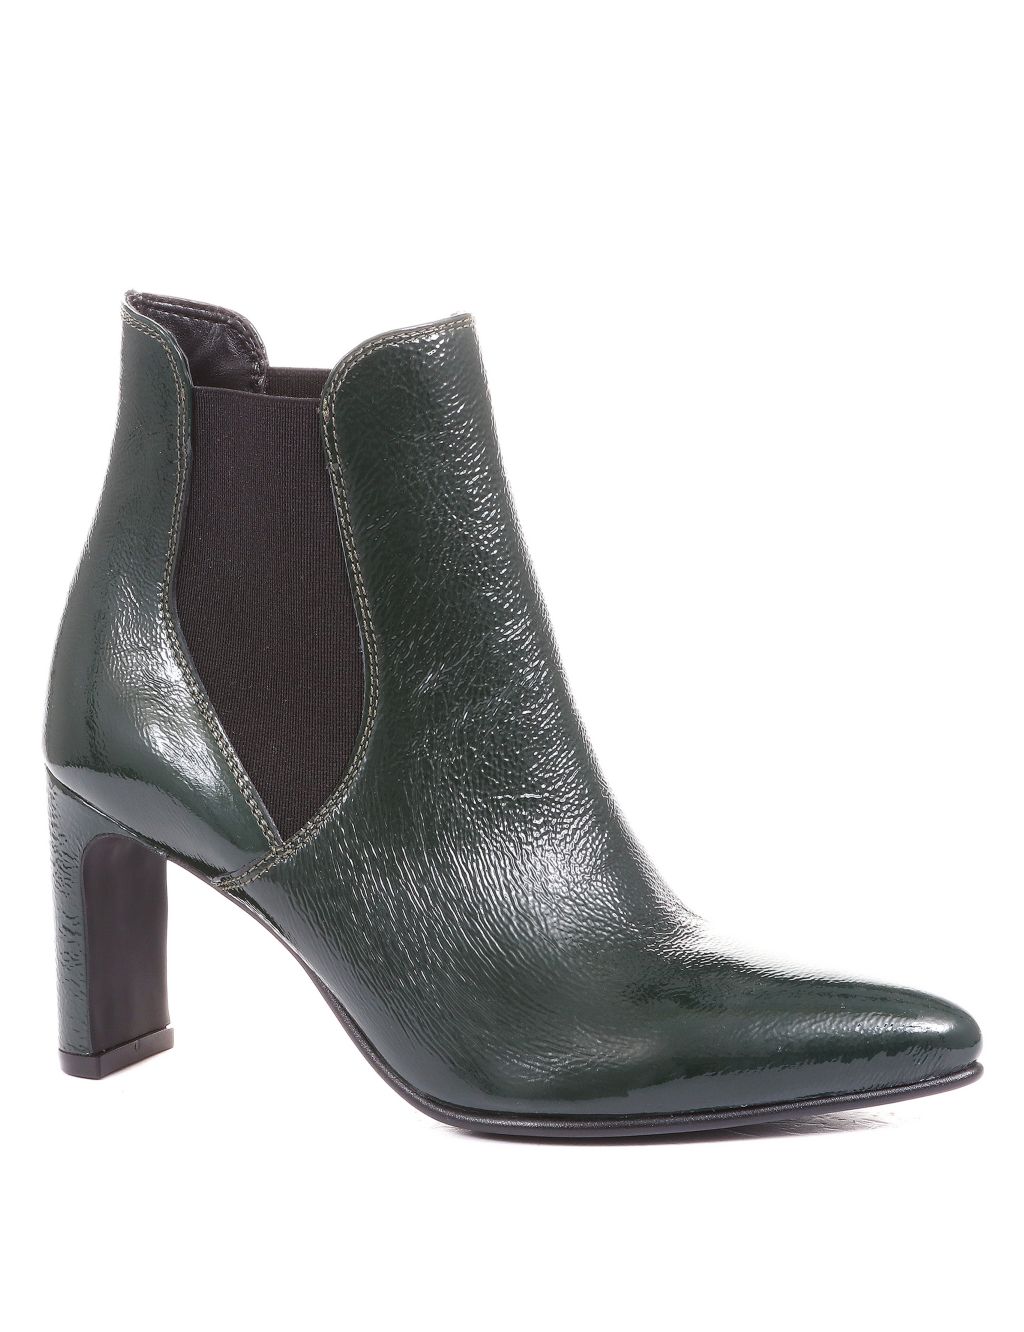 Leather Patent Chelsea Block Heel Boots image 2